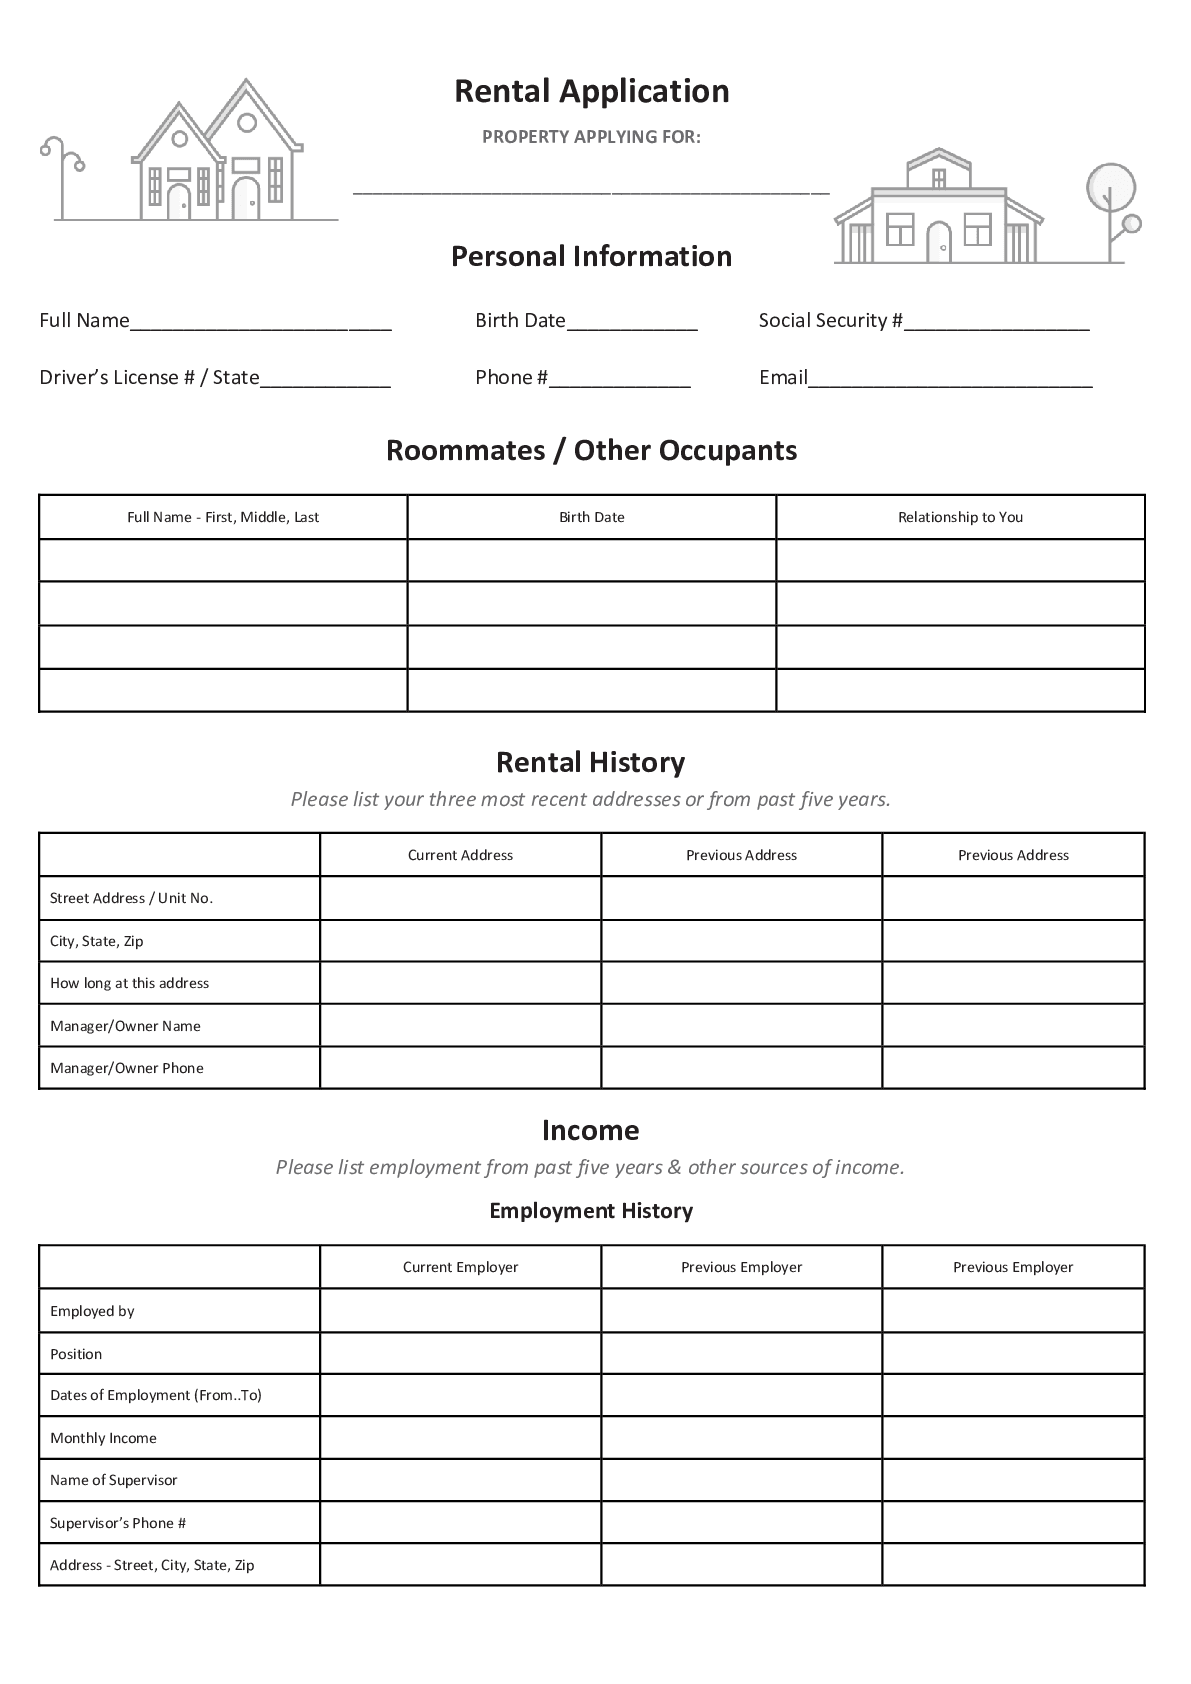 Rental Application Form Pdf from ipropertymanagement.com